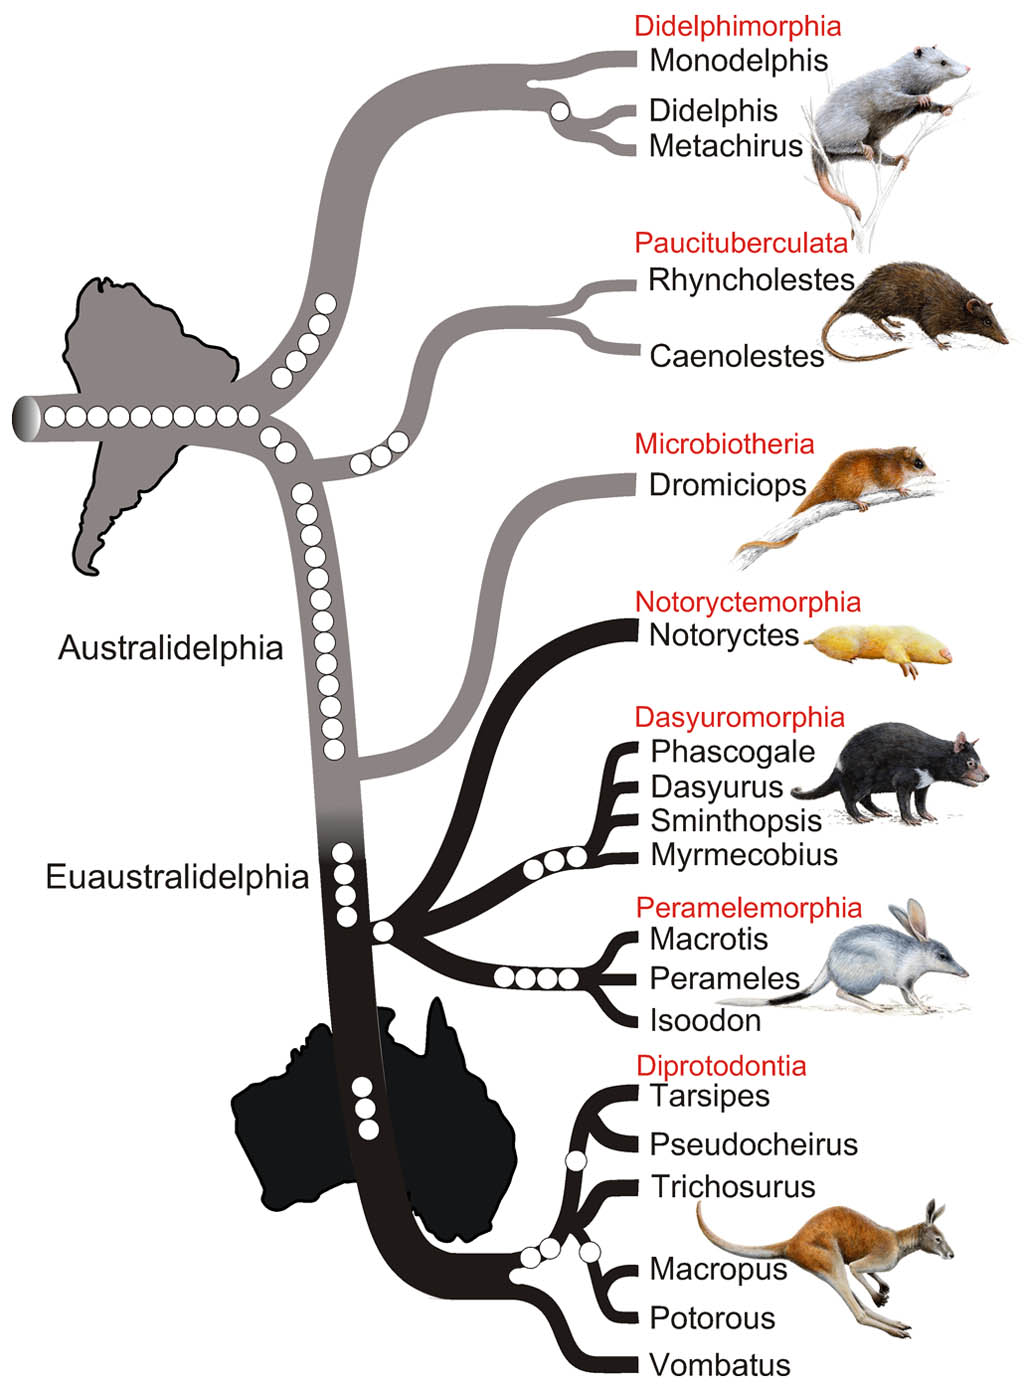 Where Did Marsupials Originate? | Ask A Biologist